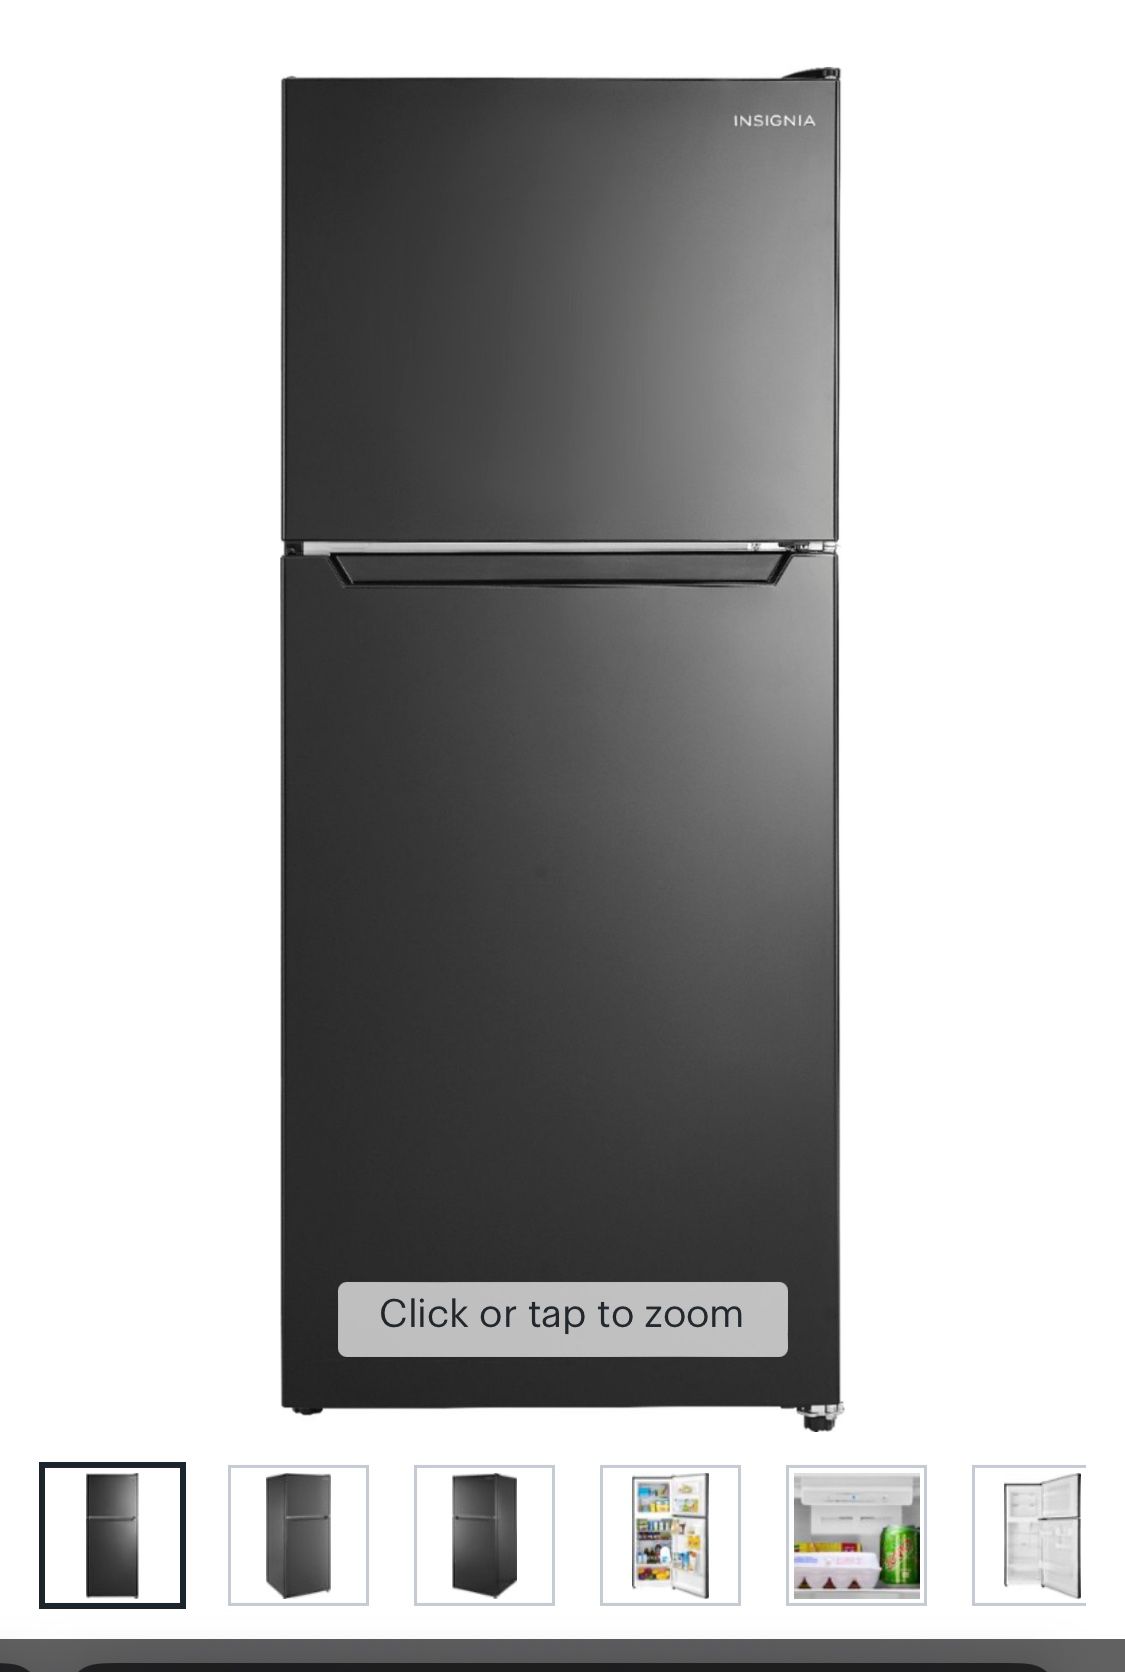 Insignia Fridge Refrigerator LIKE NEW!! 10.5 Cu Ft!